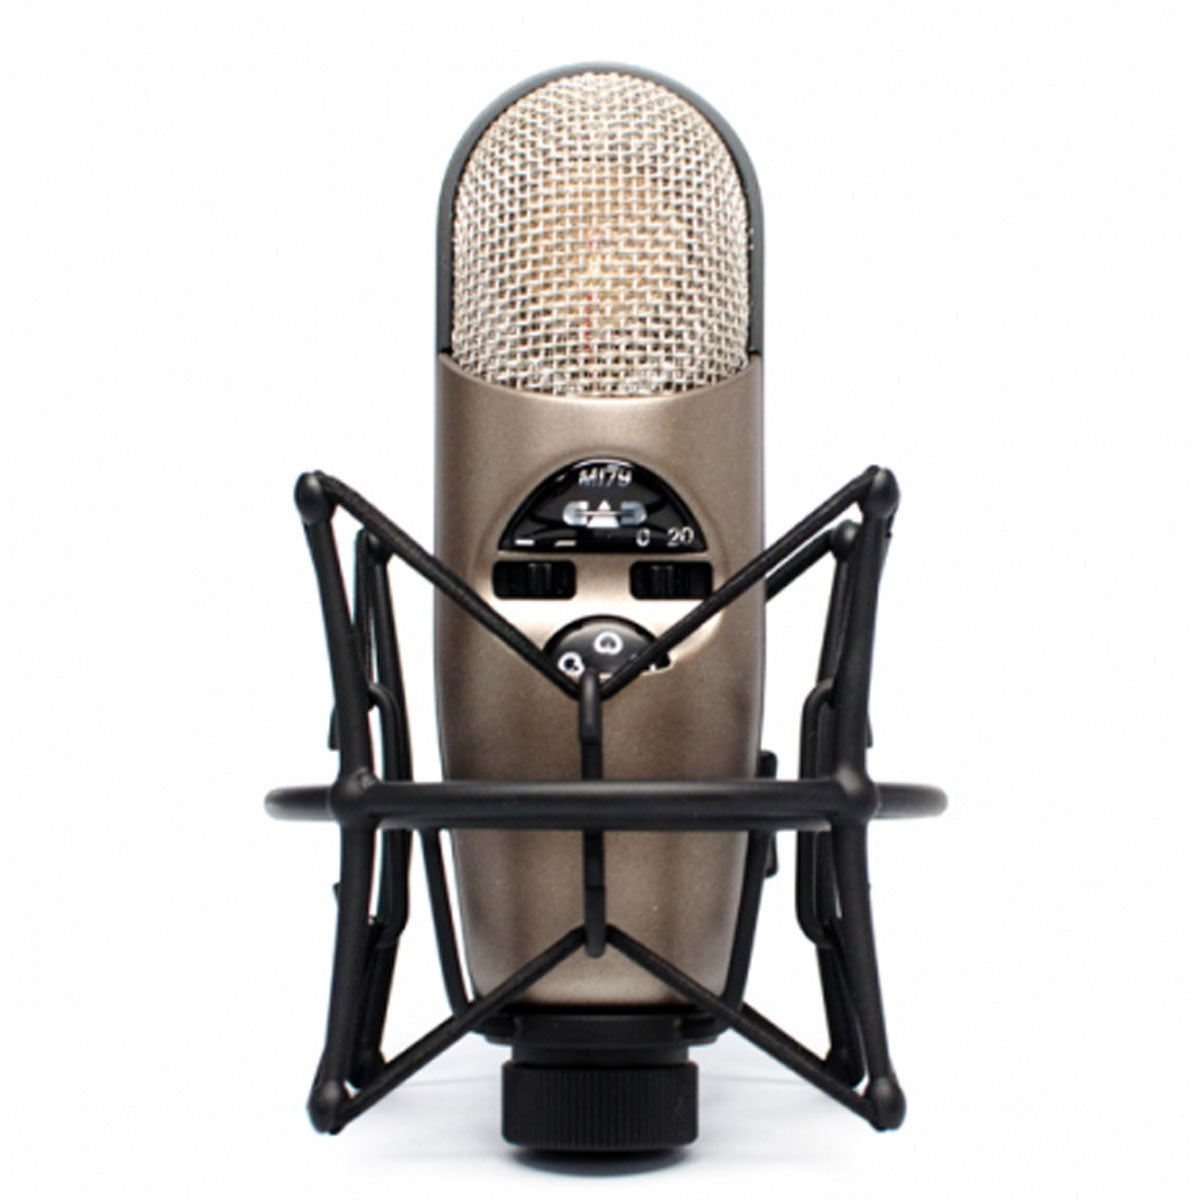 CAD Audio M179 Large Diaphragm Variable Polar Pattern Condenser Microphone